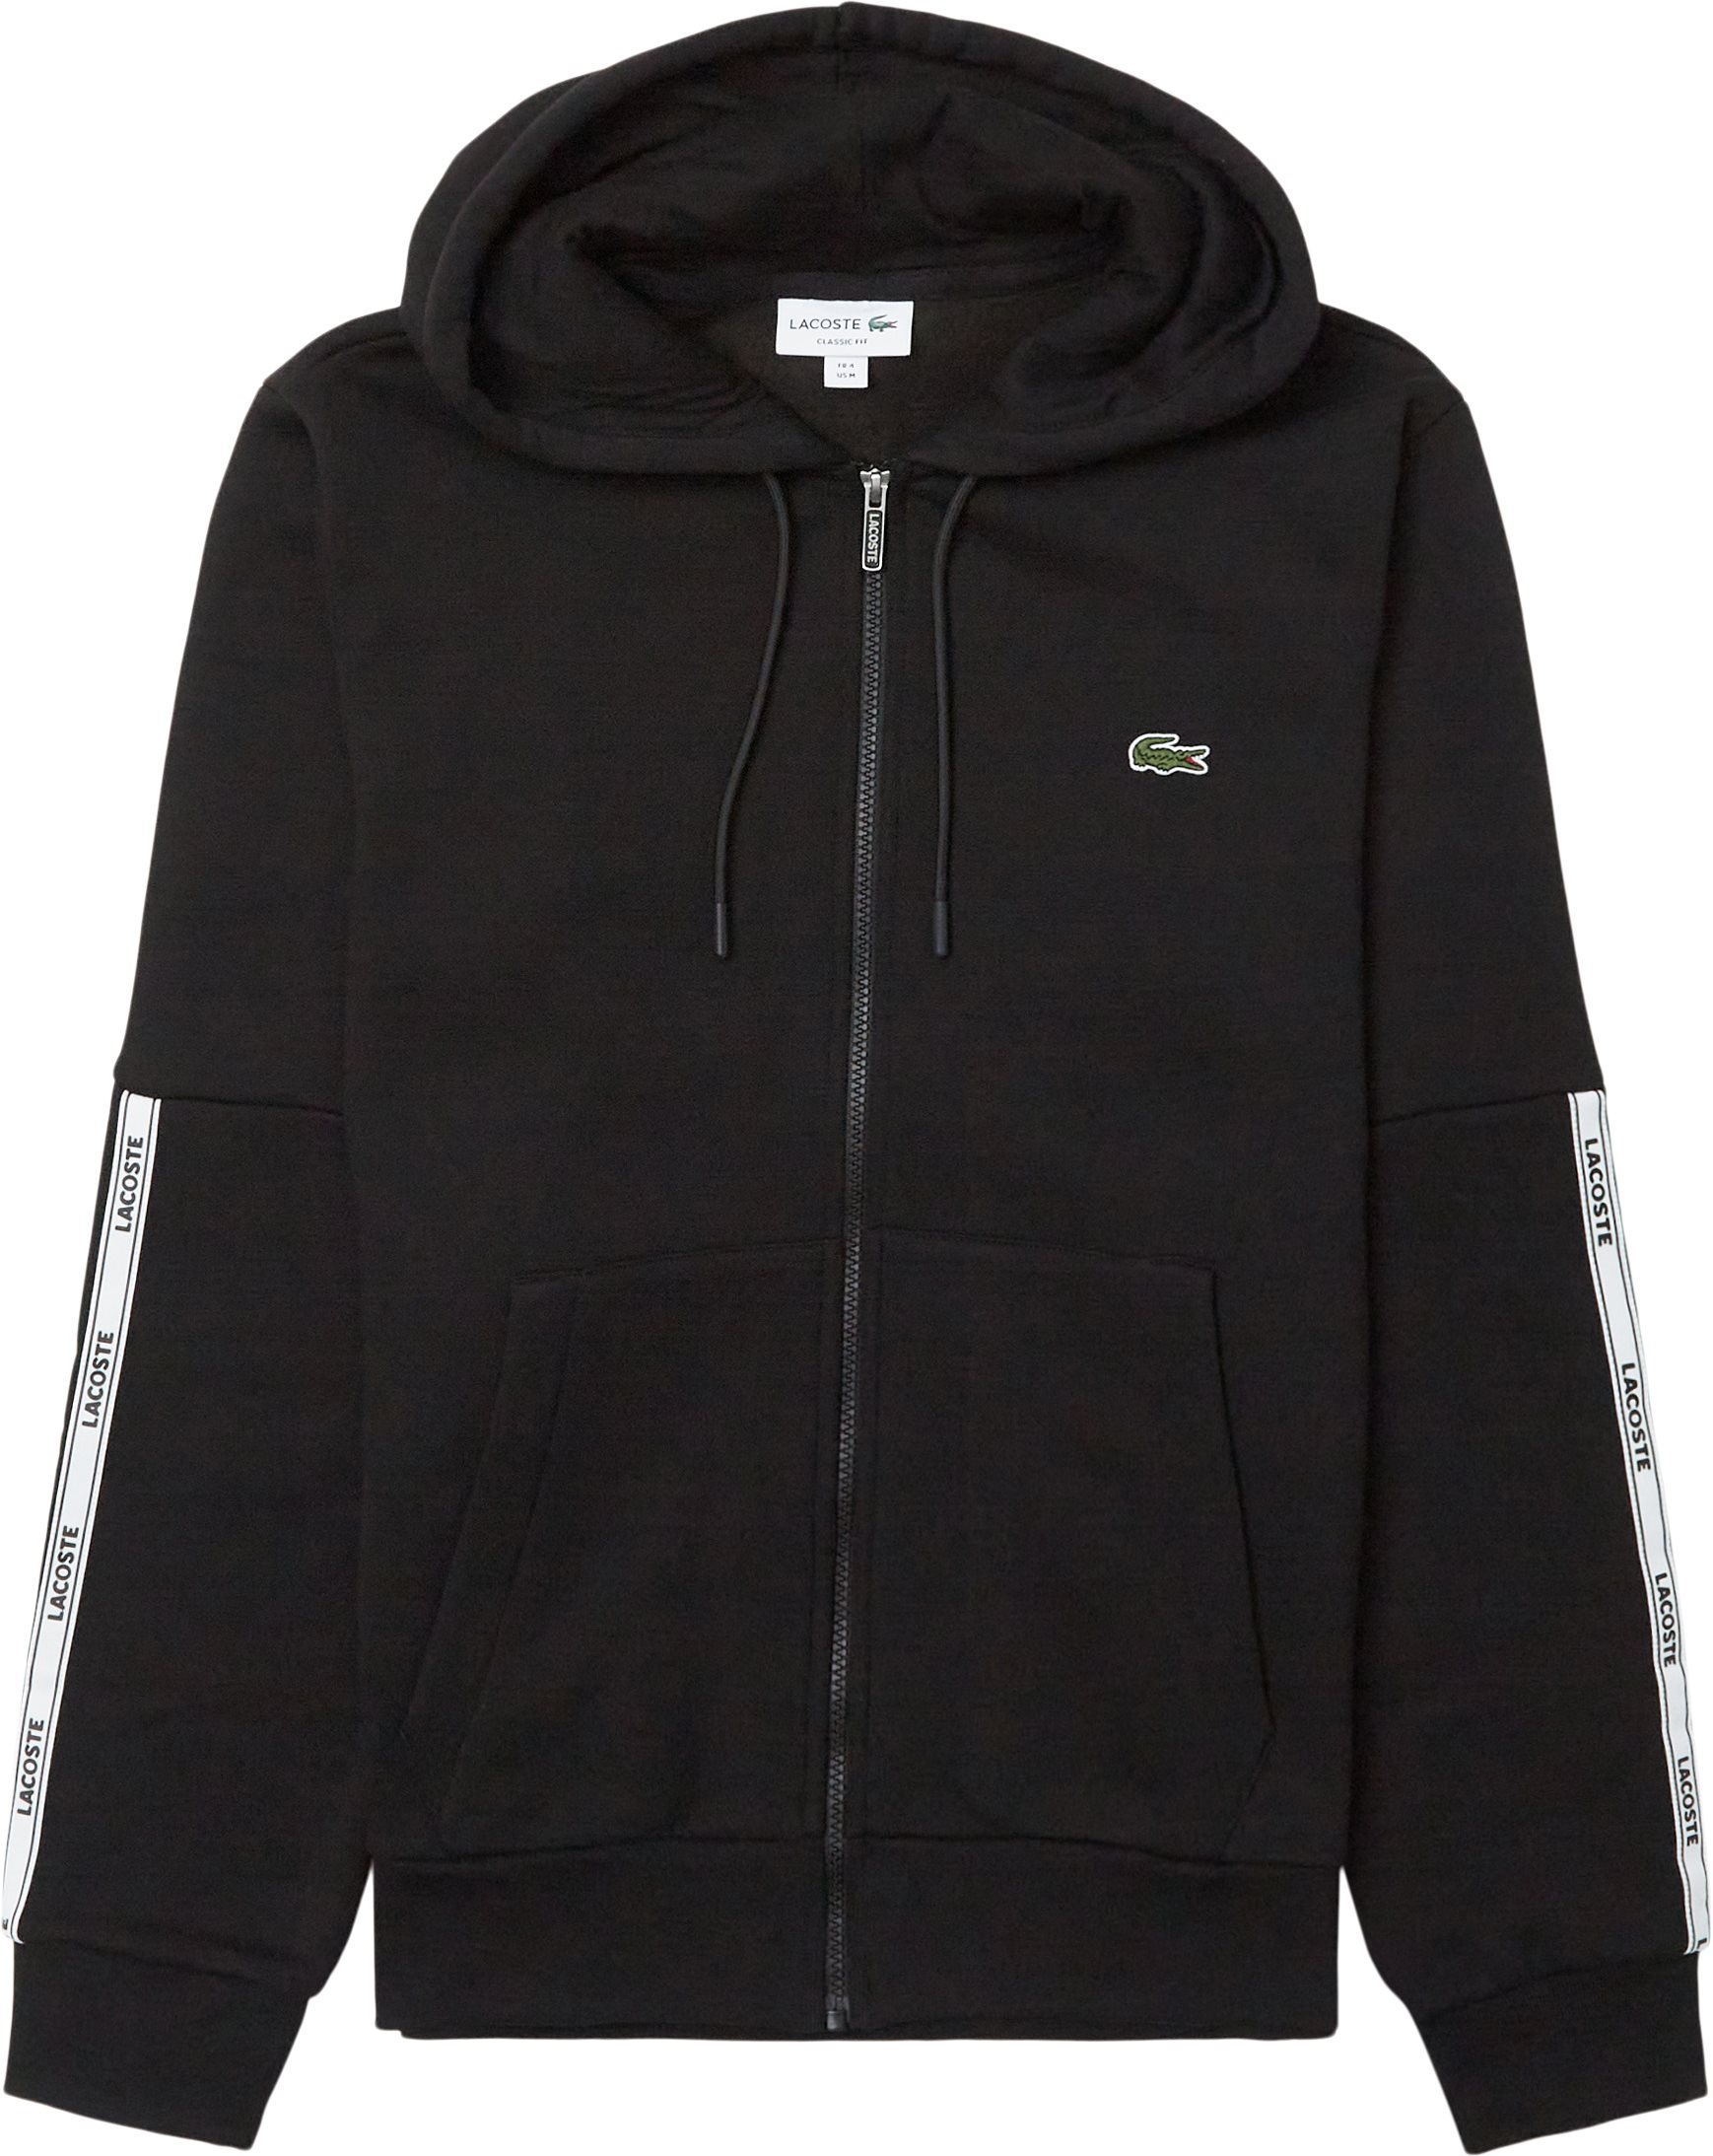 Sh1209 Zip Sweatshirt - Sweatshirts - Regular fit - Black